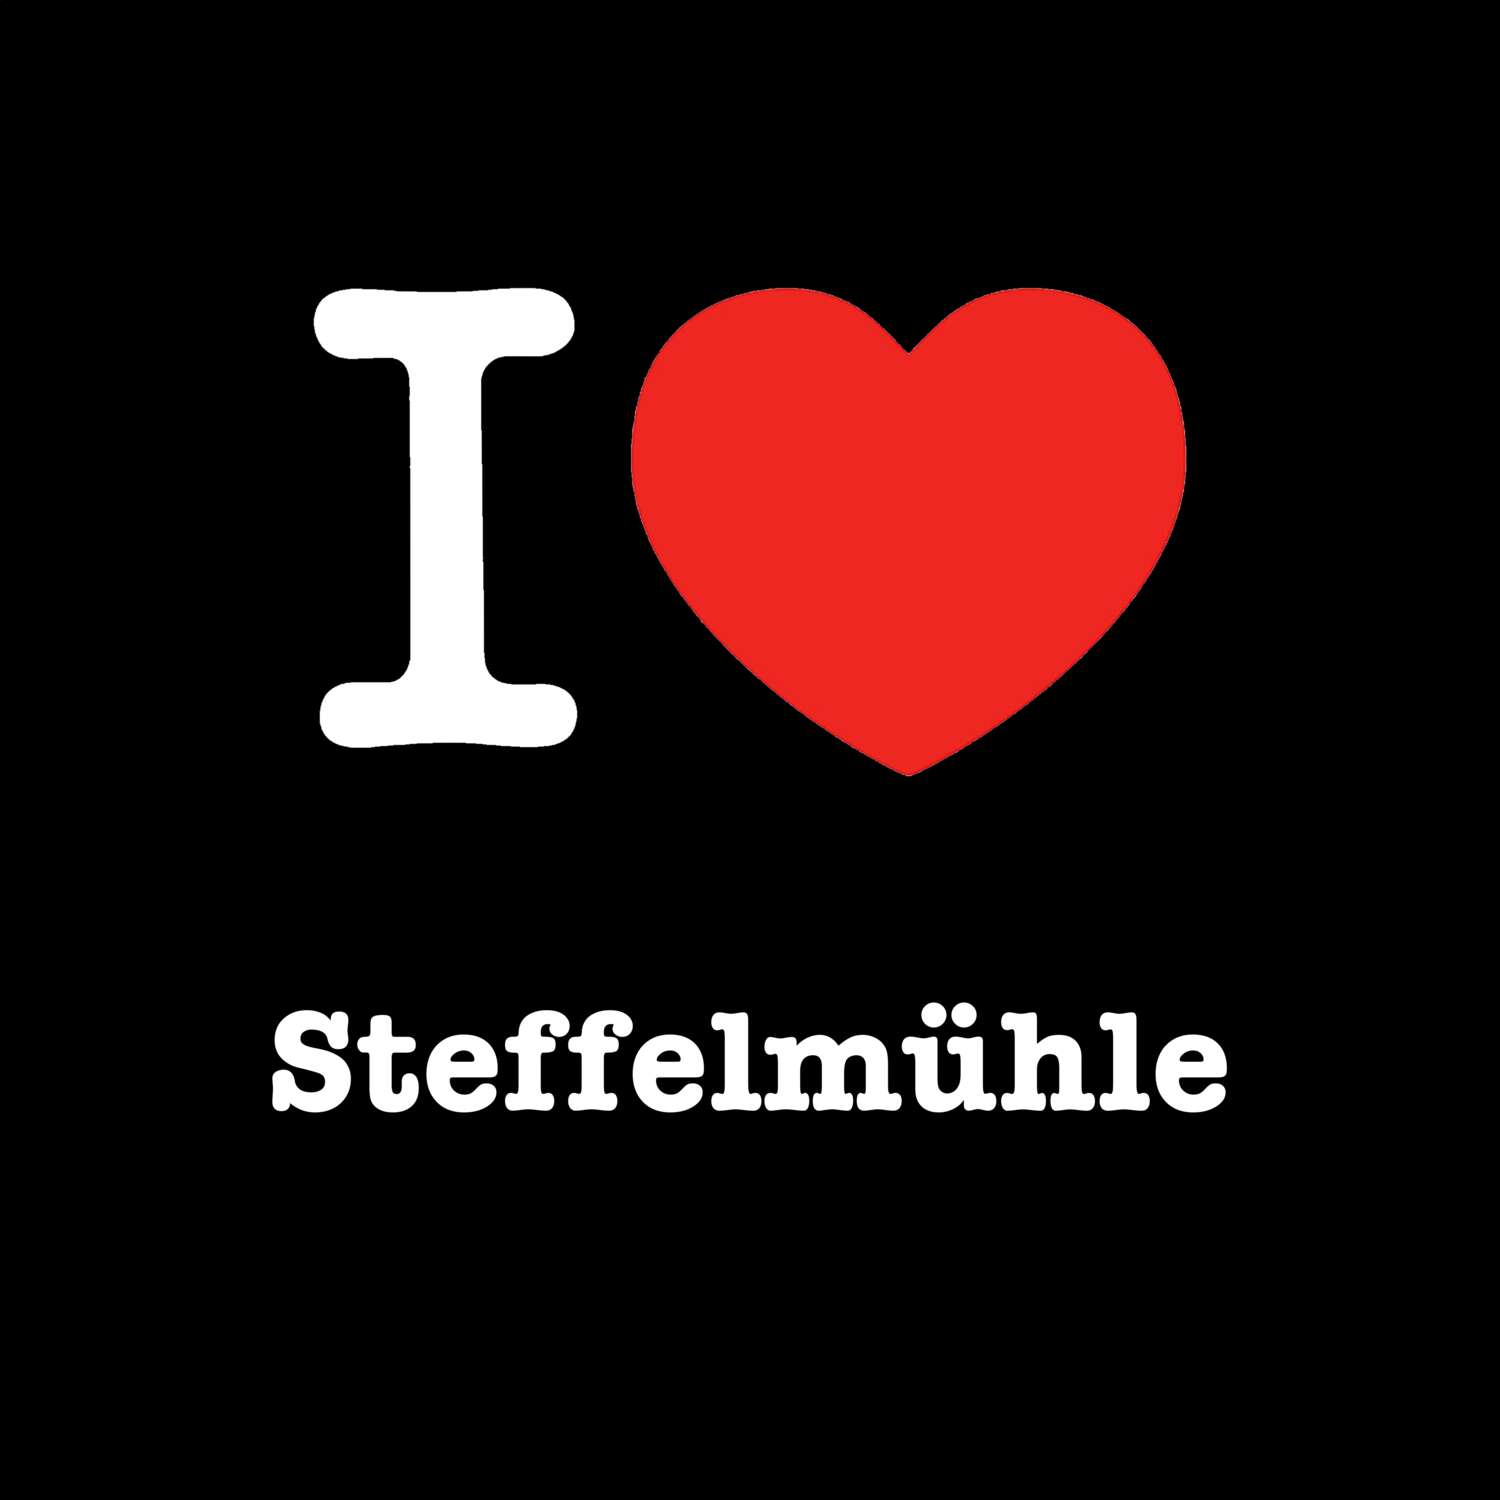 Steffelmühle T-Shirt »I love«